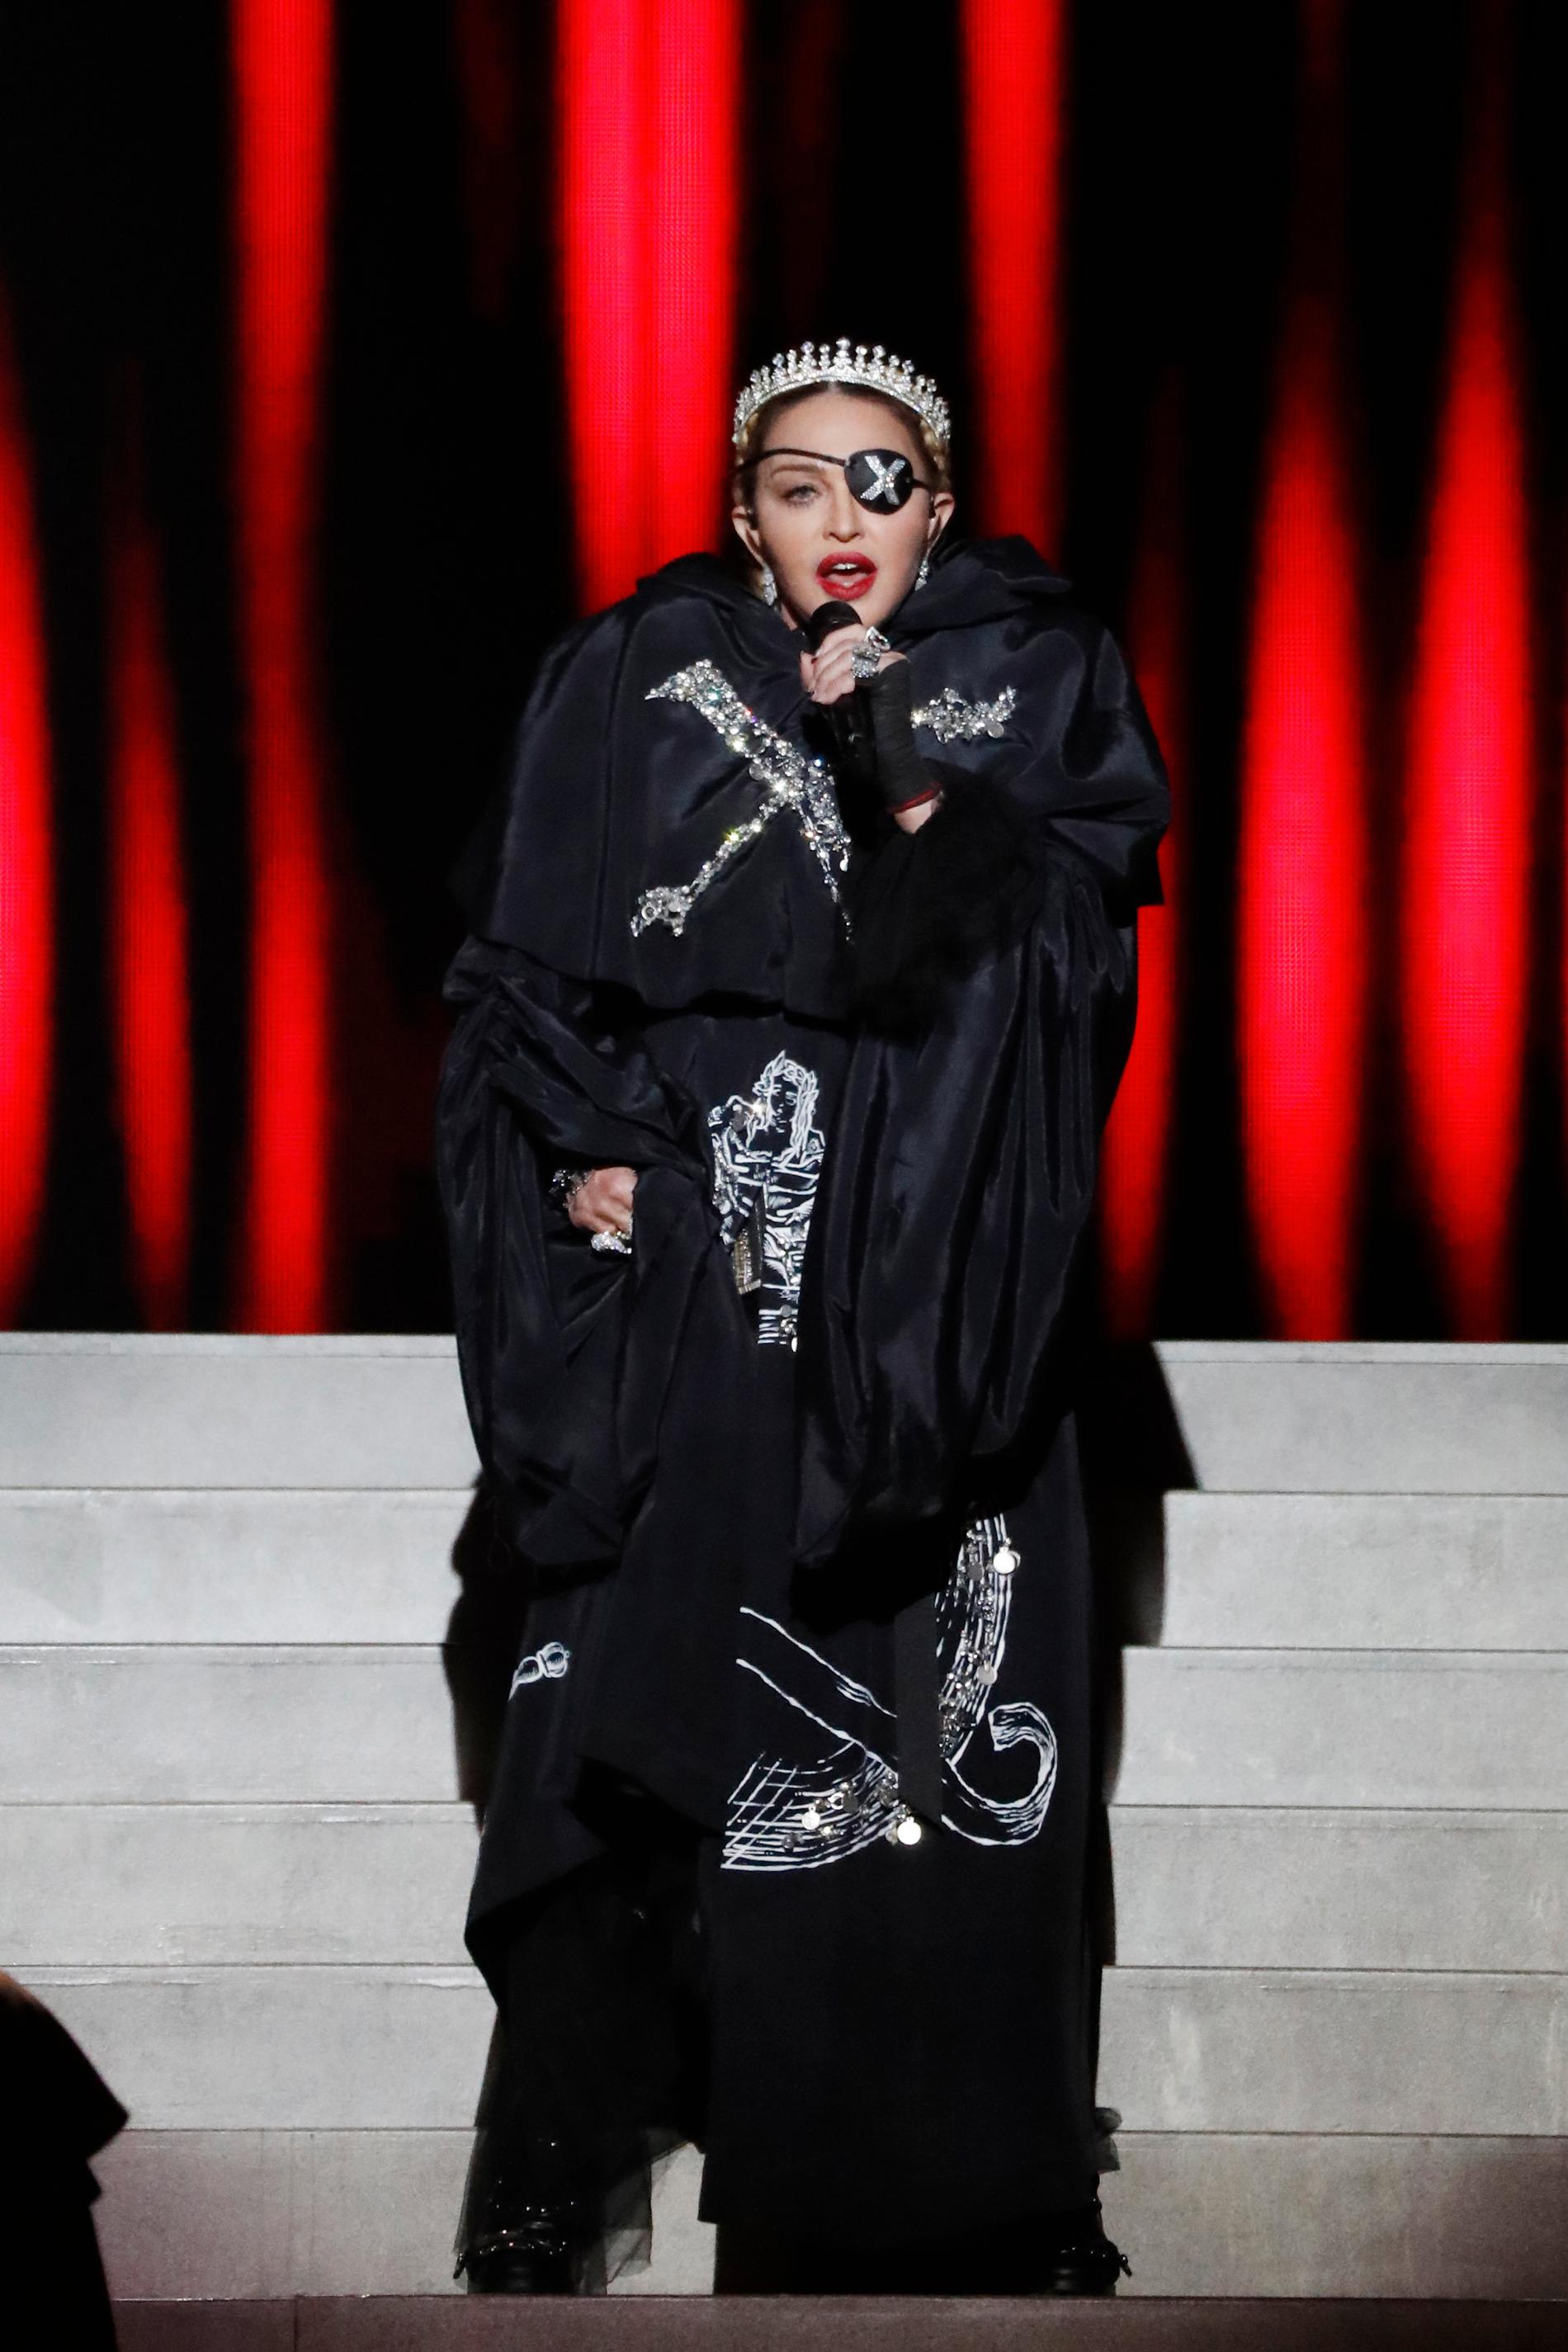 Madonnas framträdande under ”Eurovision song contest” 2019